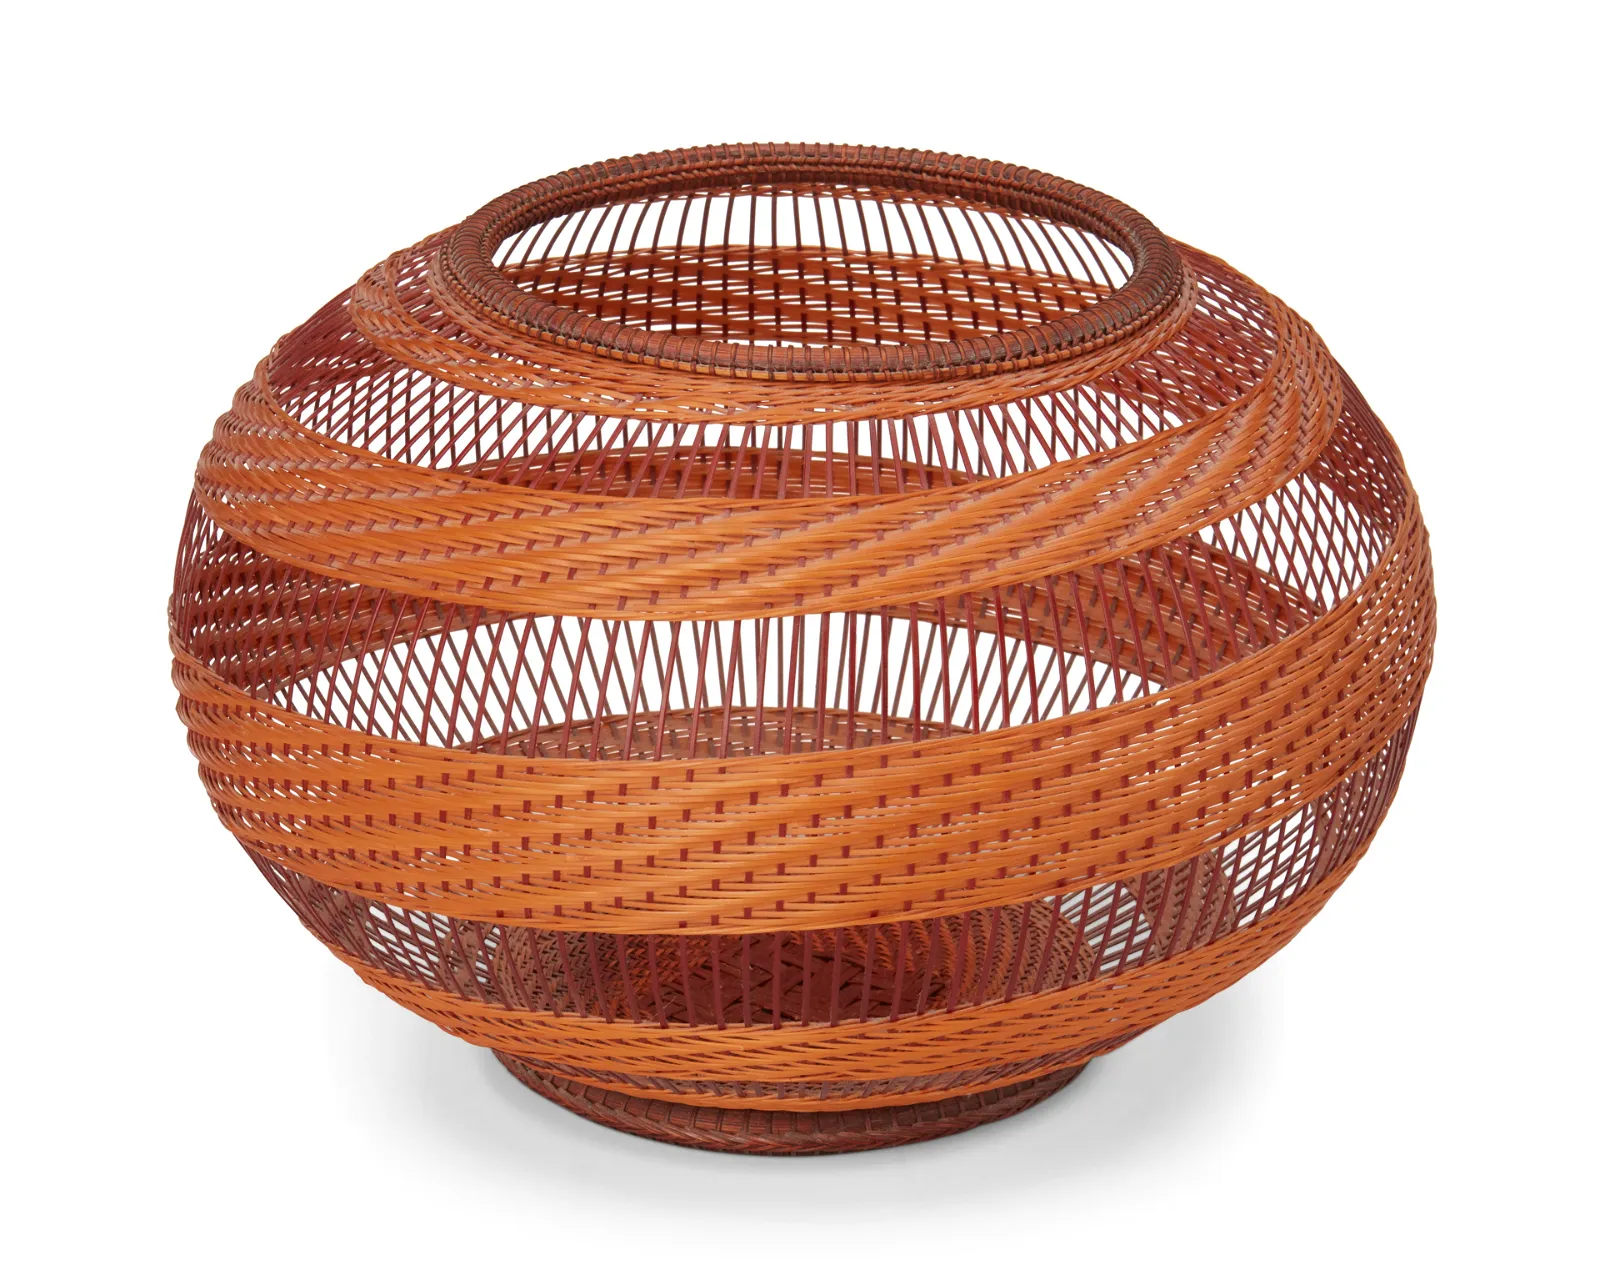 Contemporary Japanese Ikebana basketry wove magical results at John Moran